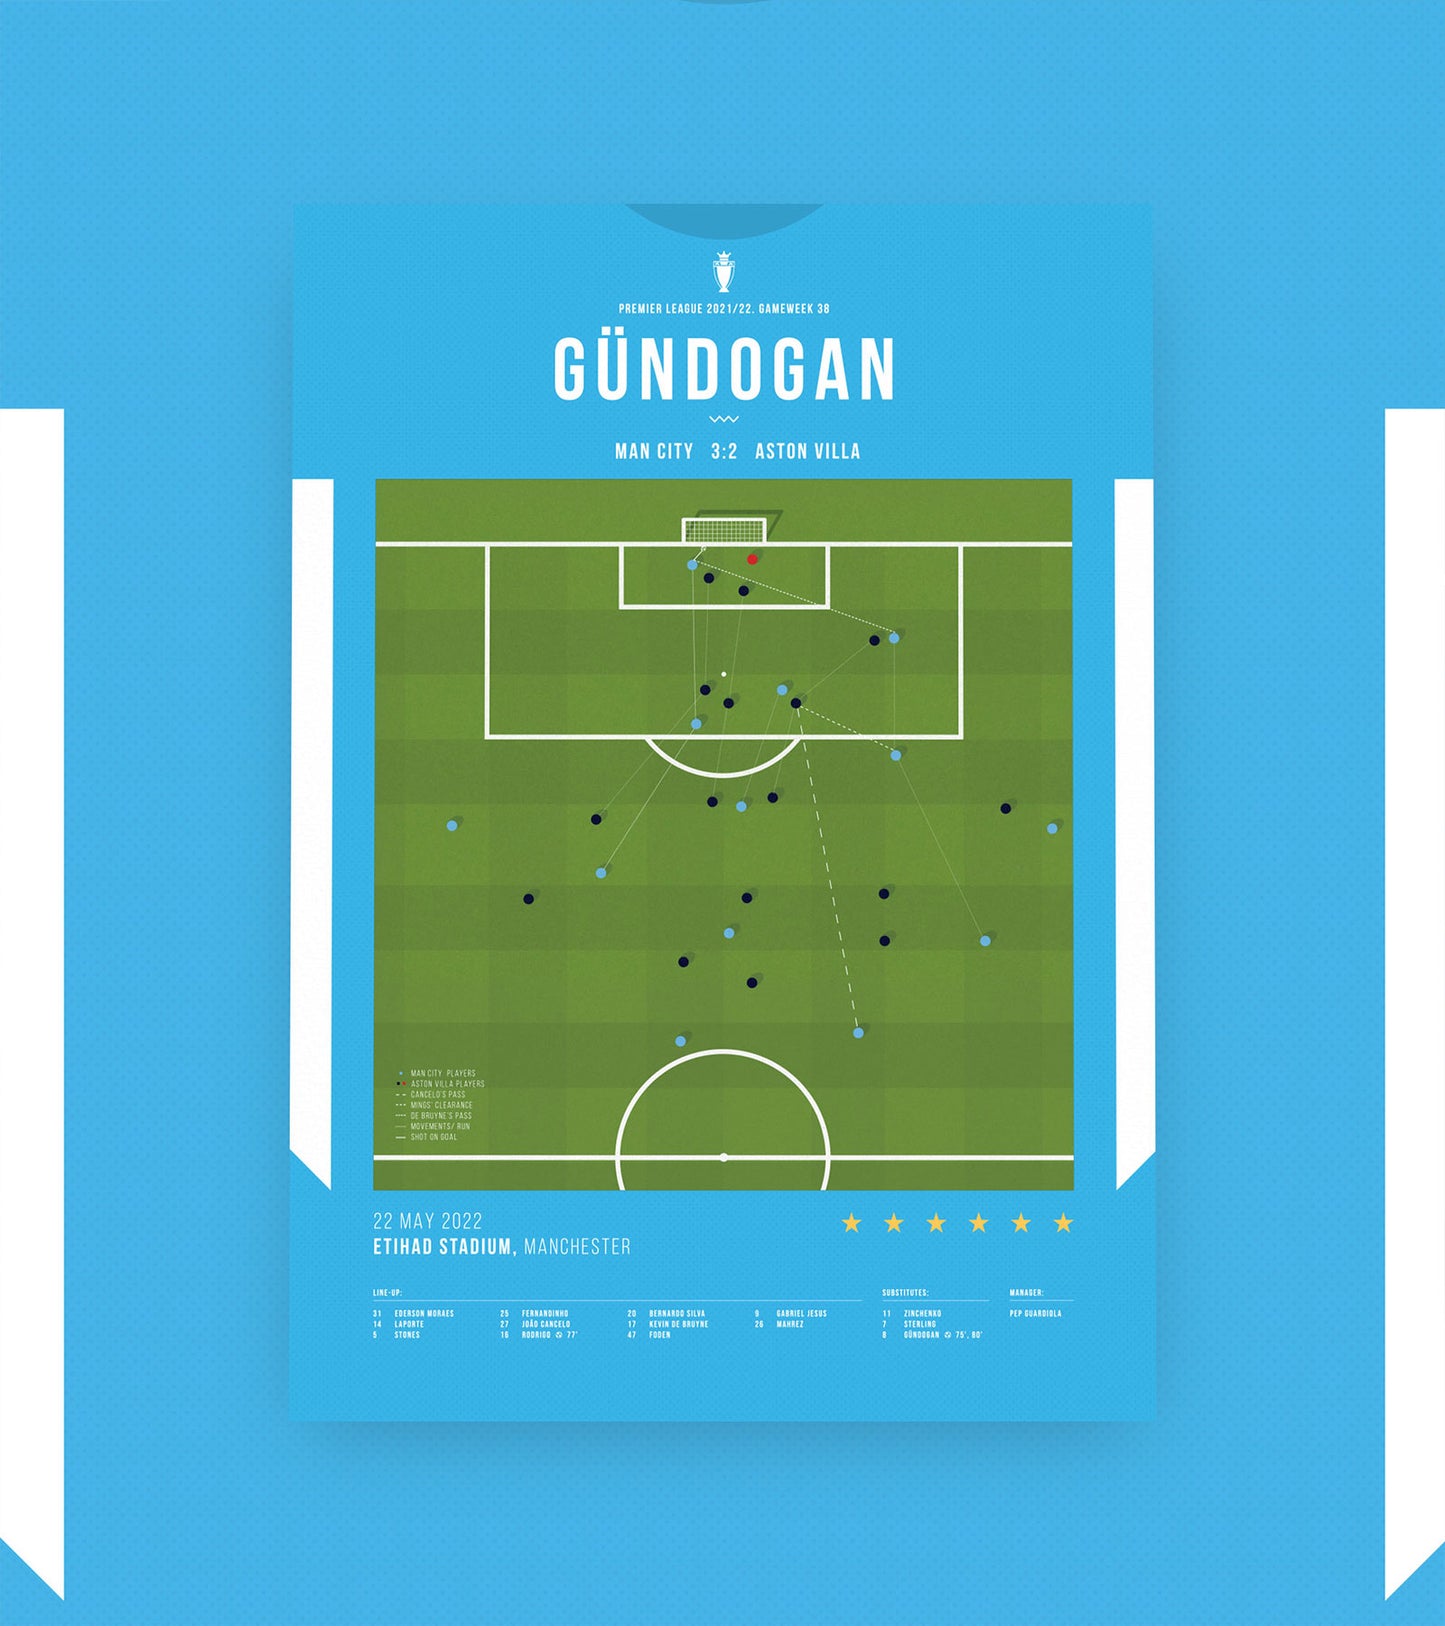 Gündogan title-winning goal